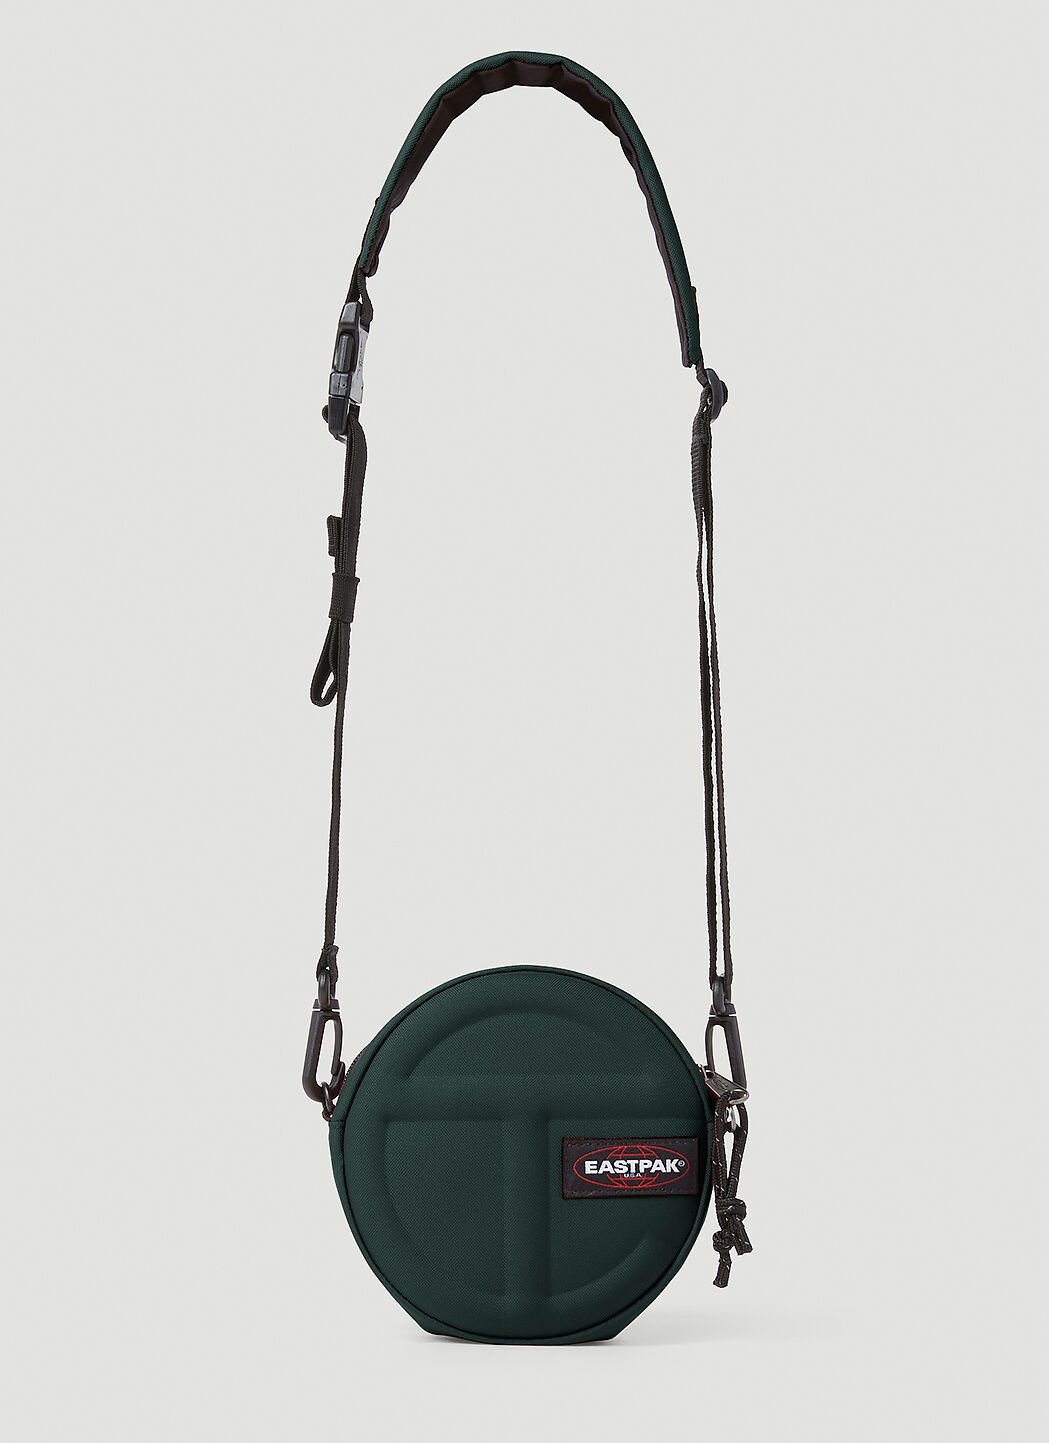 Eastpak x Telfar Circle Convertible Crossbody Bag Red est0353019